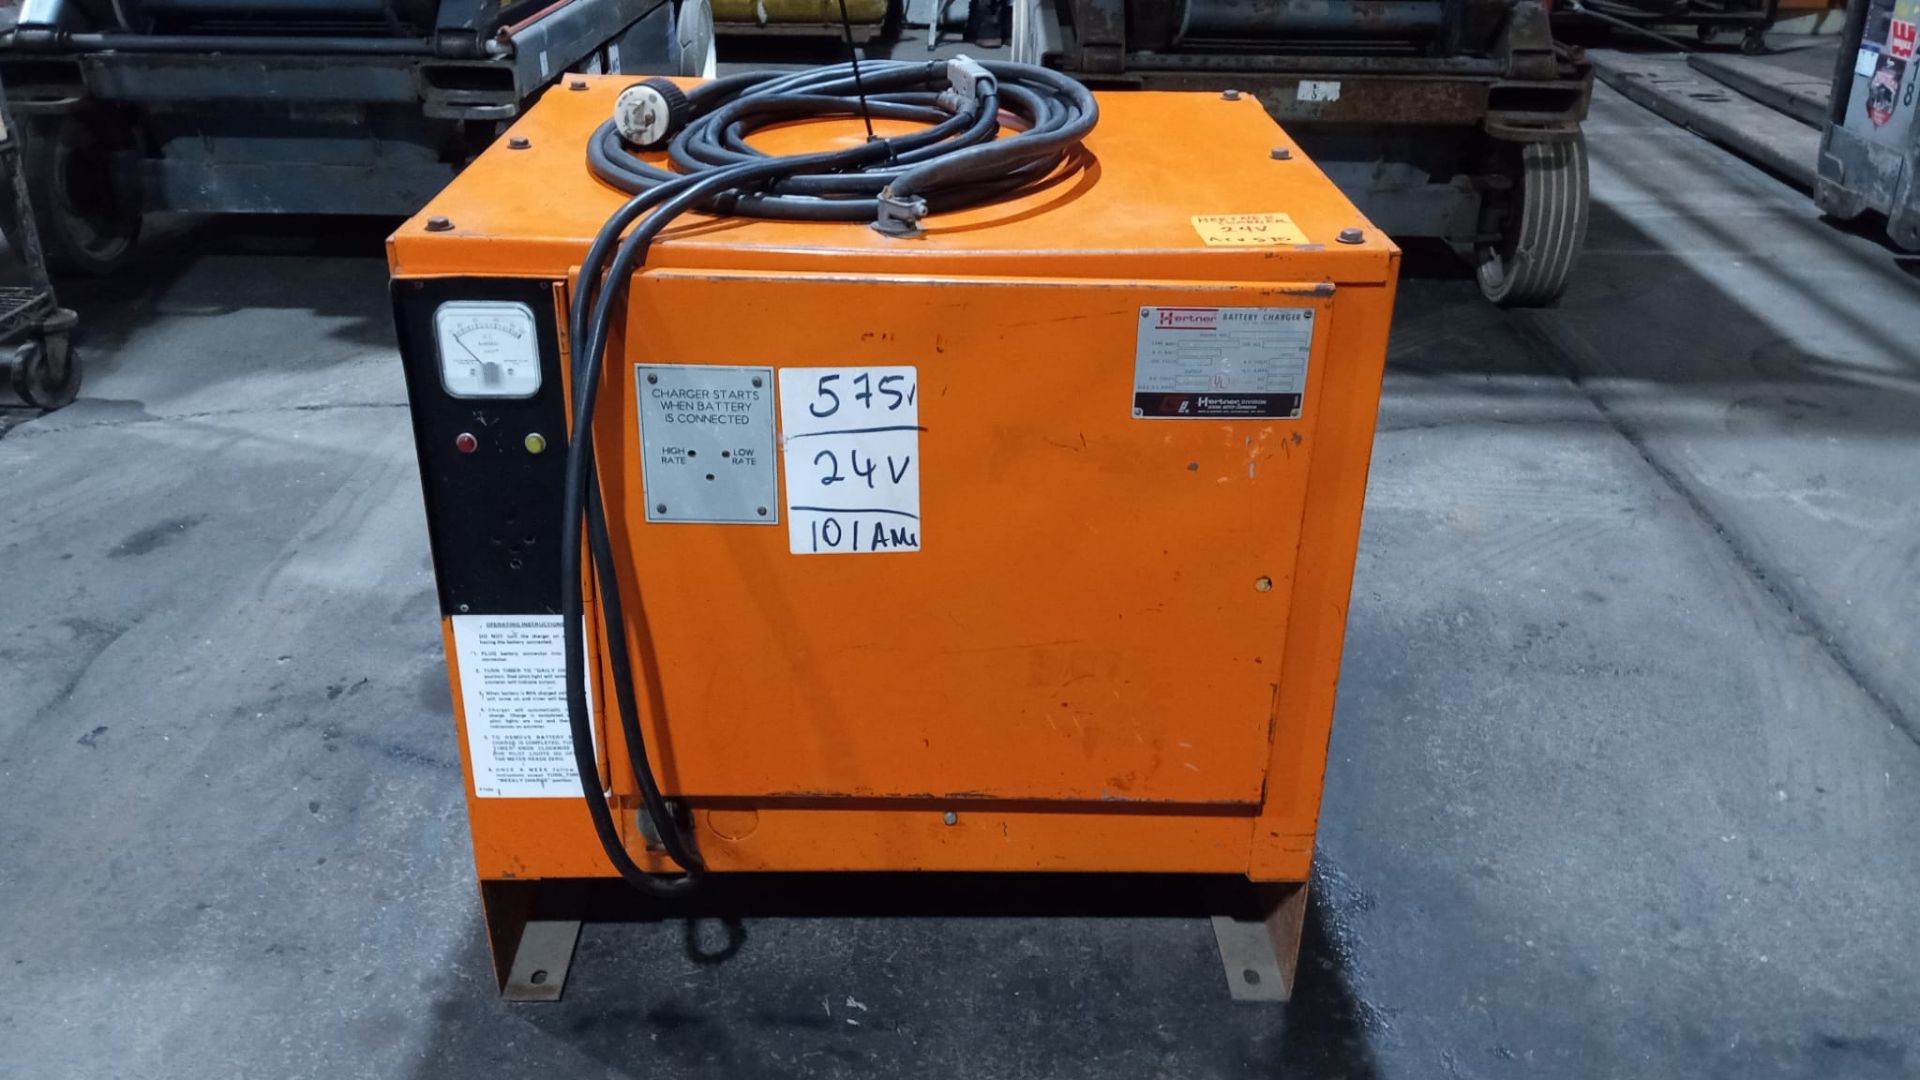 Hertner Forklift Battery Charger 24V Unit - 575V Input 3 phase